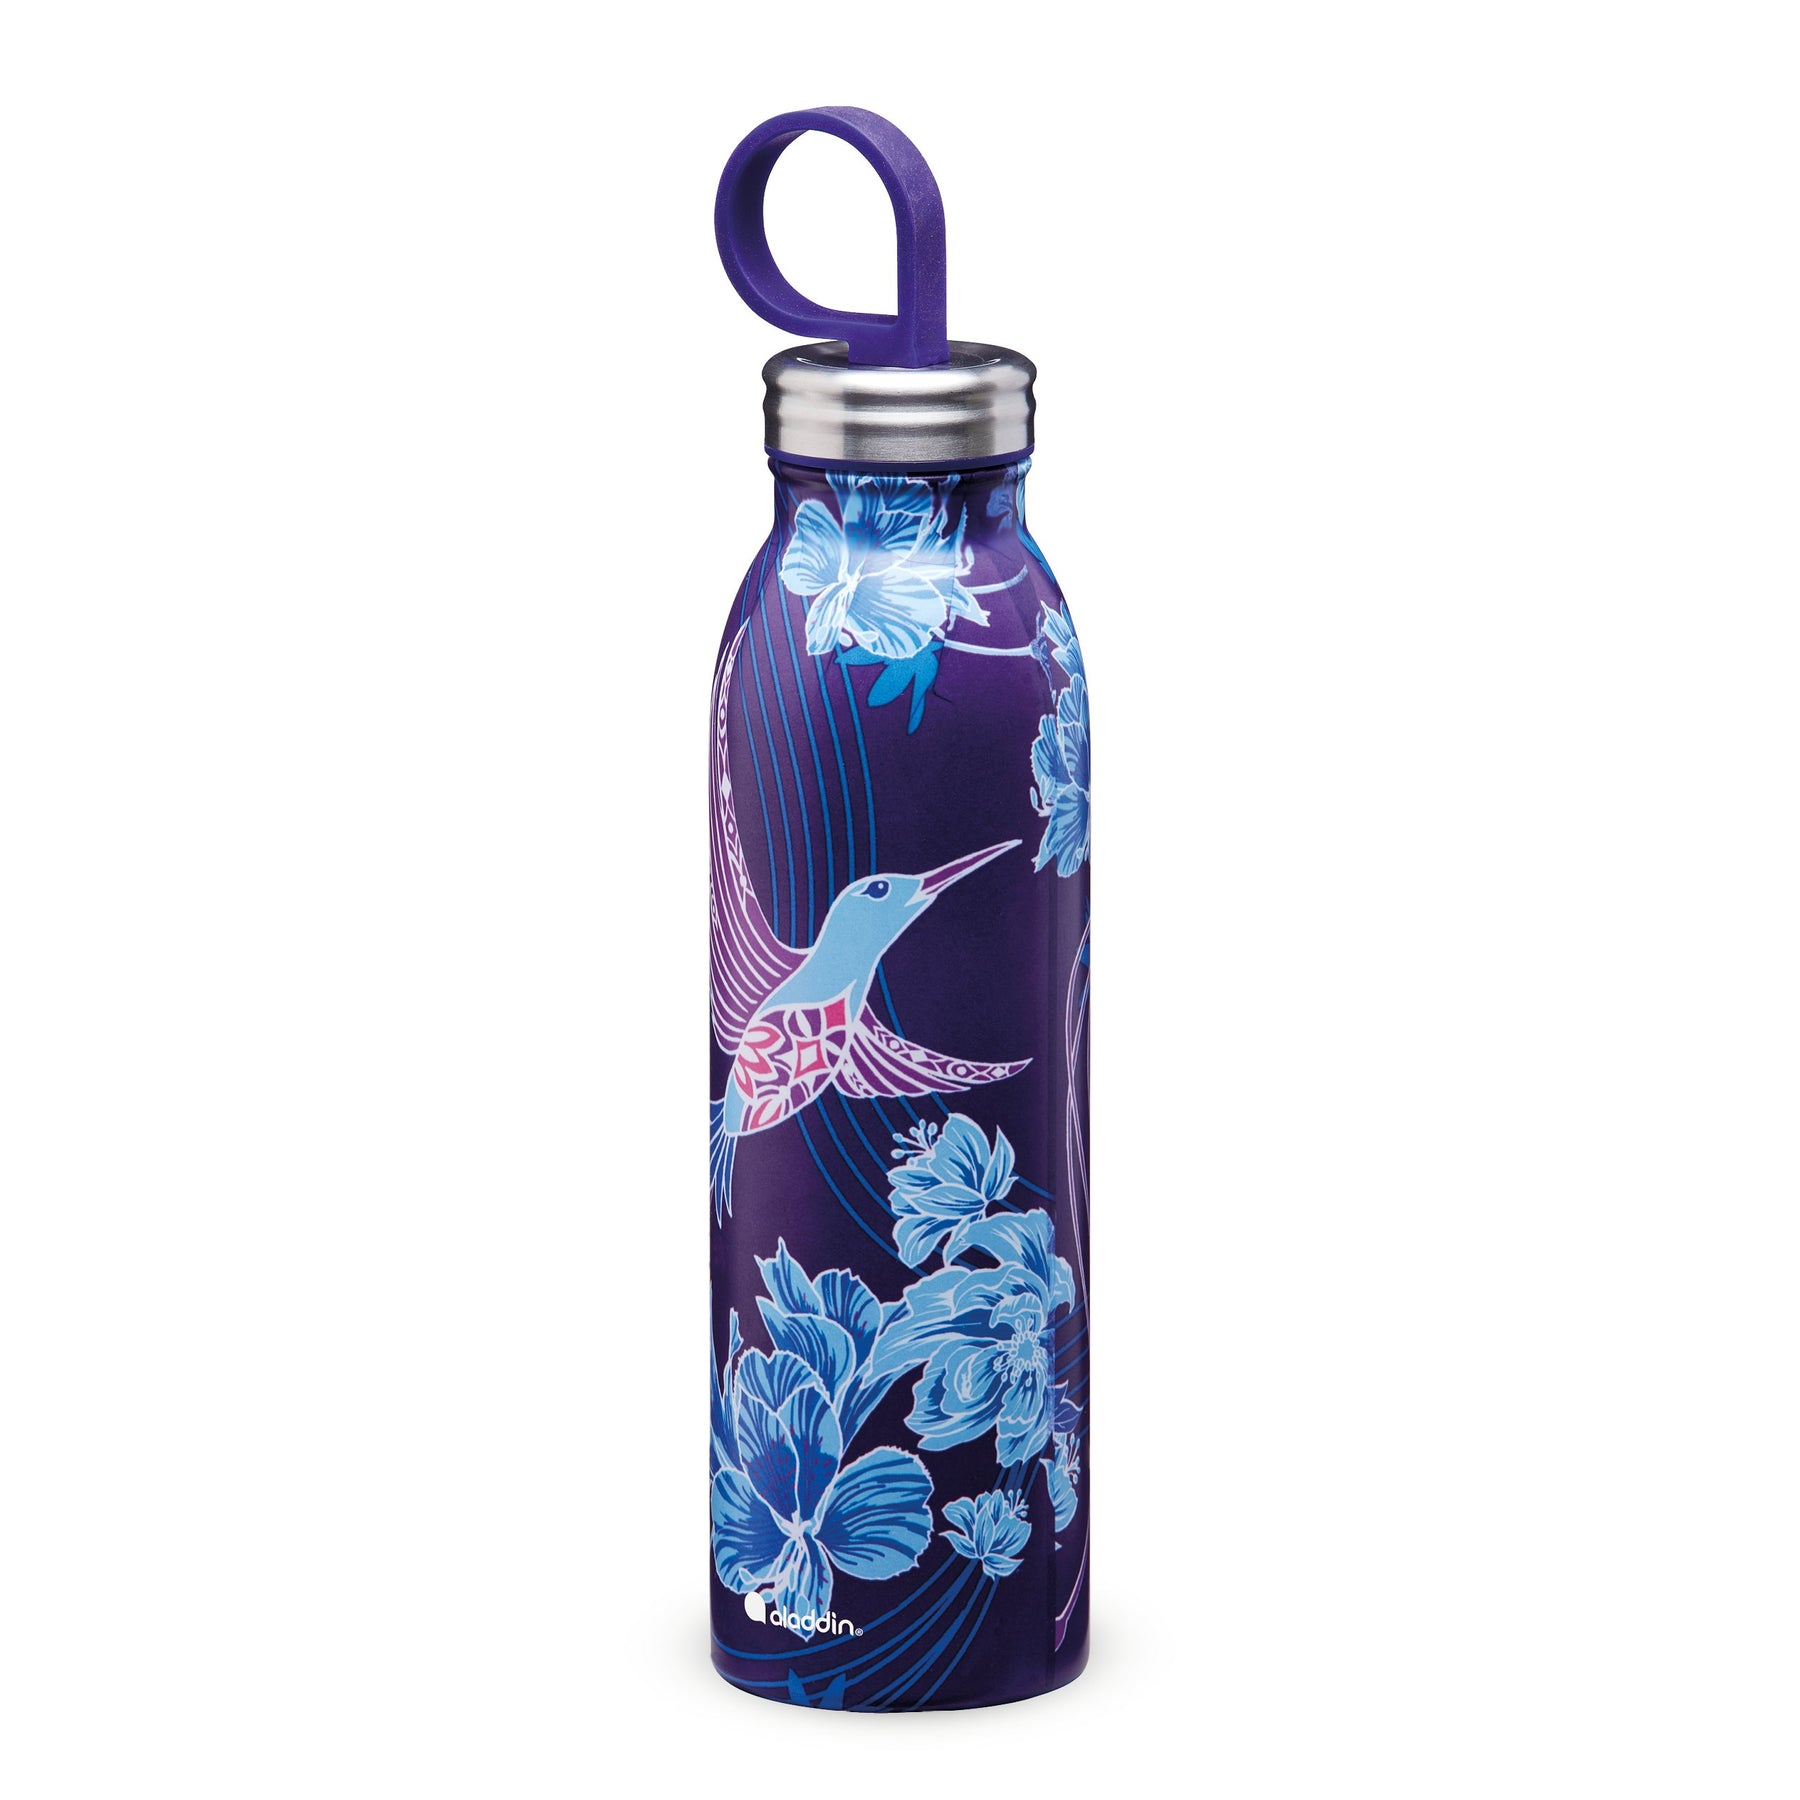 Aladdin-Chilled-Thermavac_-Style-Stainless-Steel-Water-Bottle-0.55L-Riverside-Indigo-10-09425-008-Hero_1800x1800